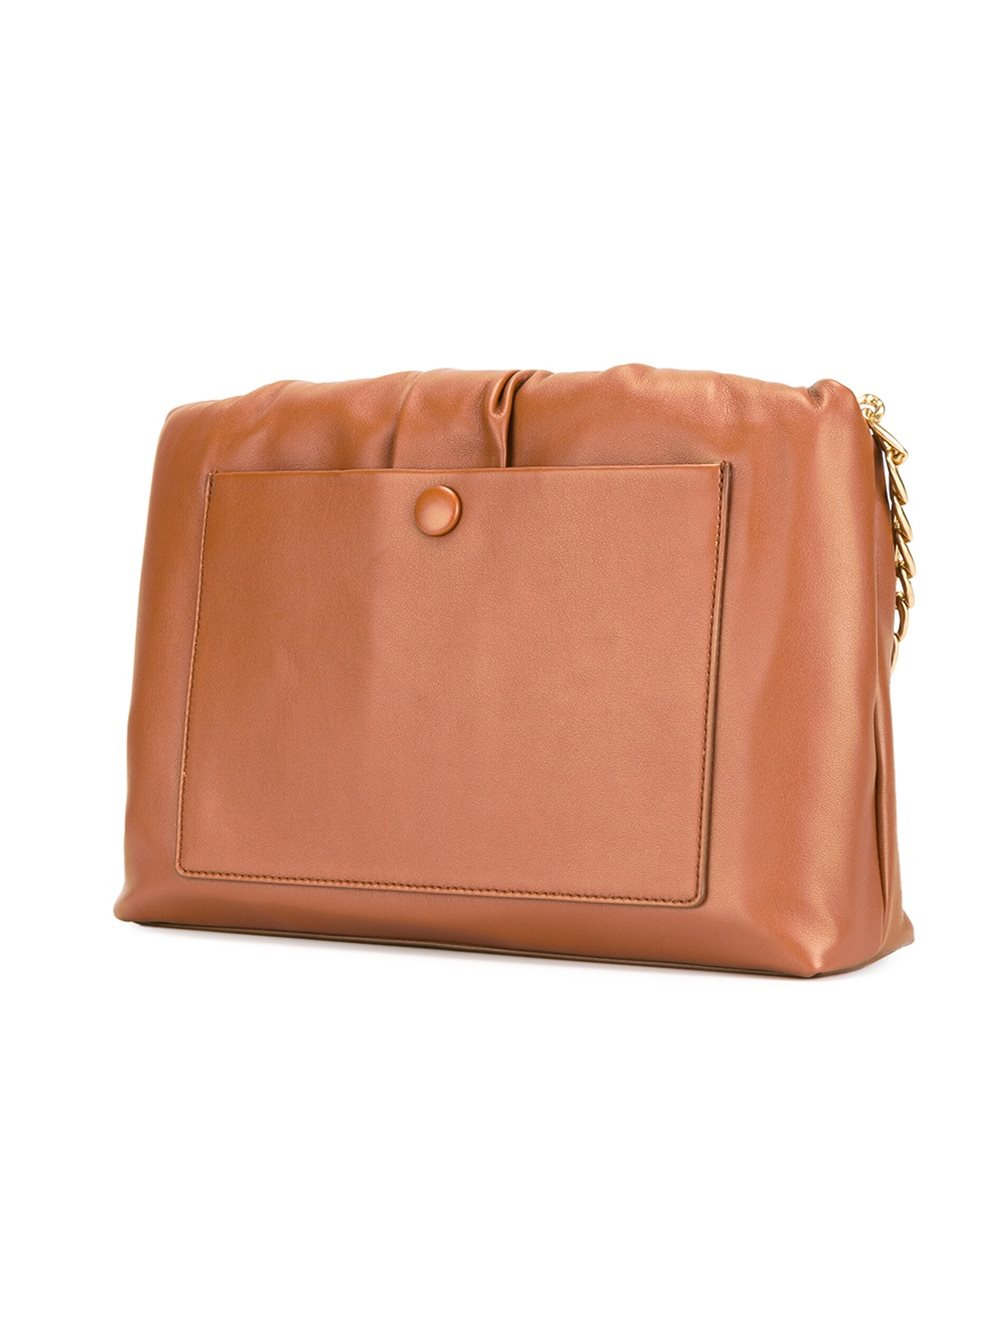 Lyst - Stella McCartney 'nina' Shoulder Bag in Brown